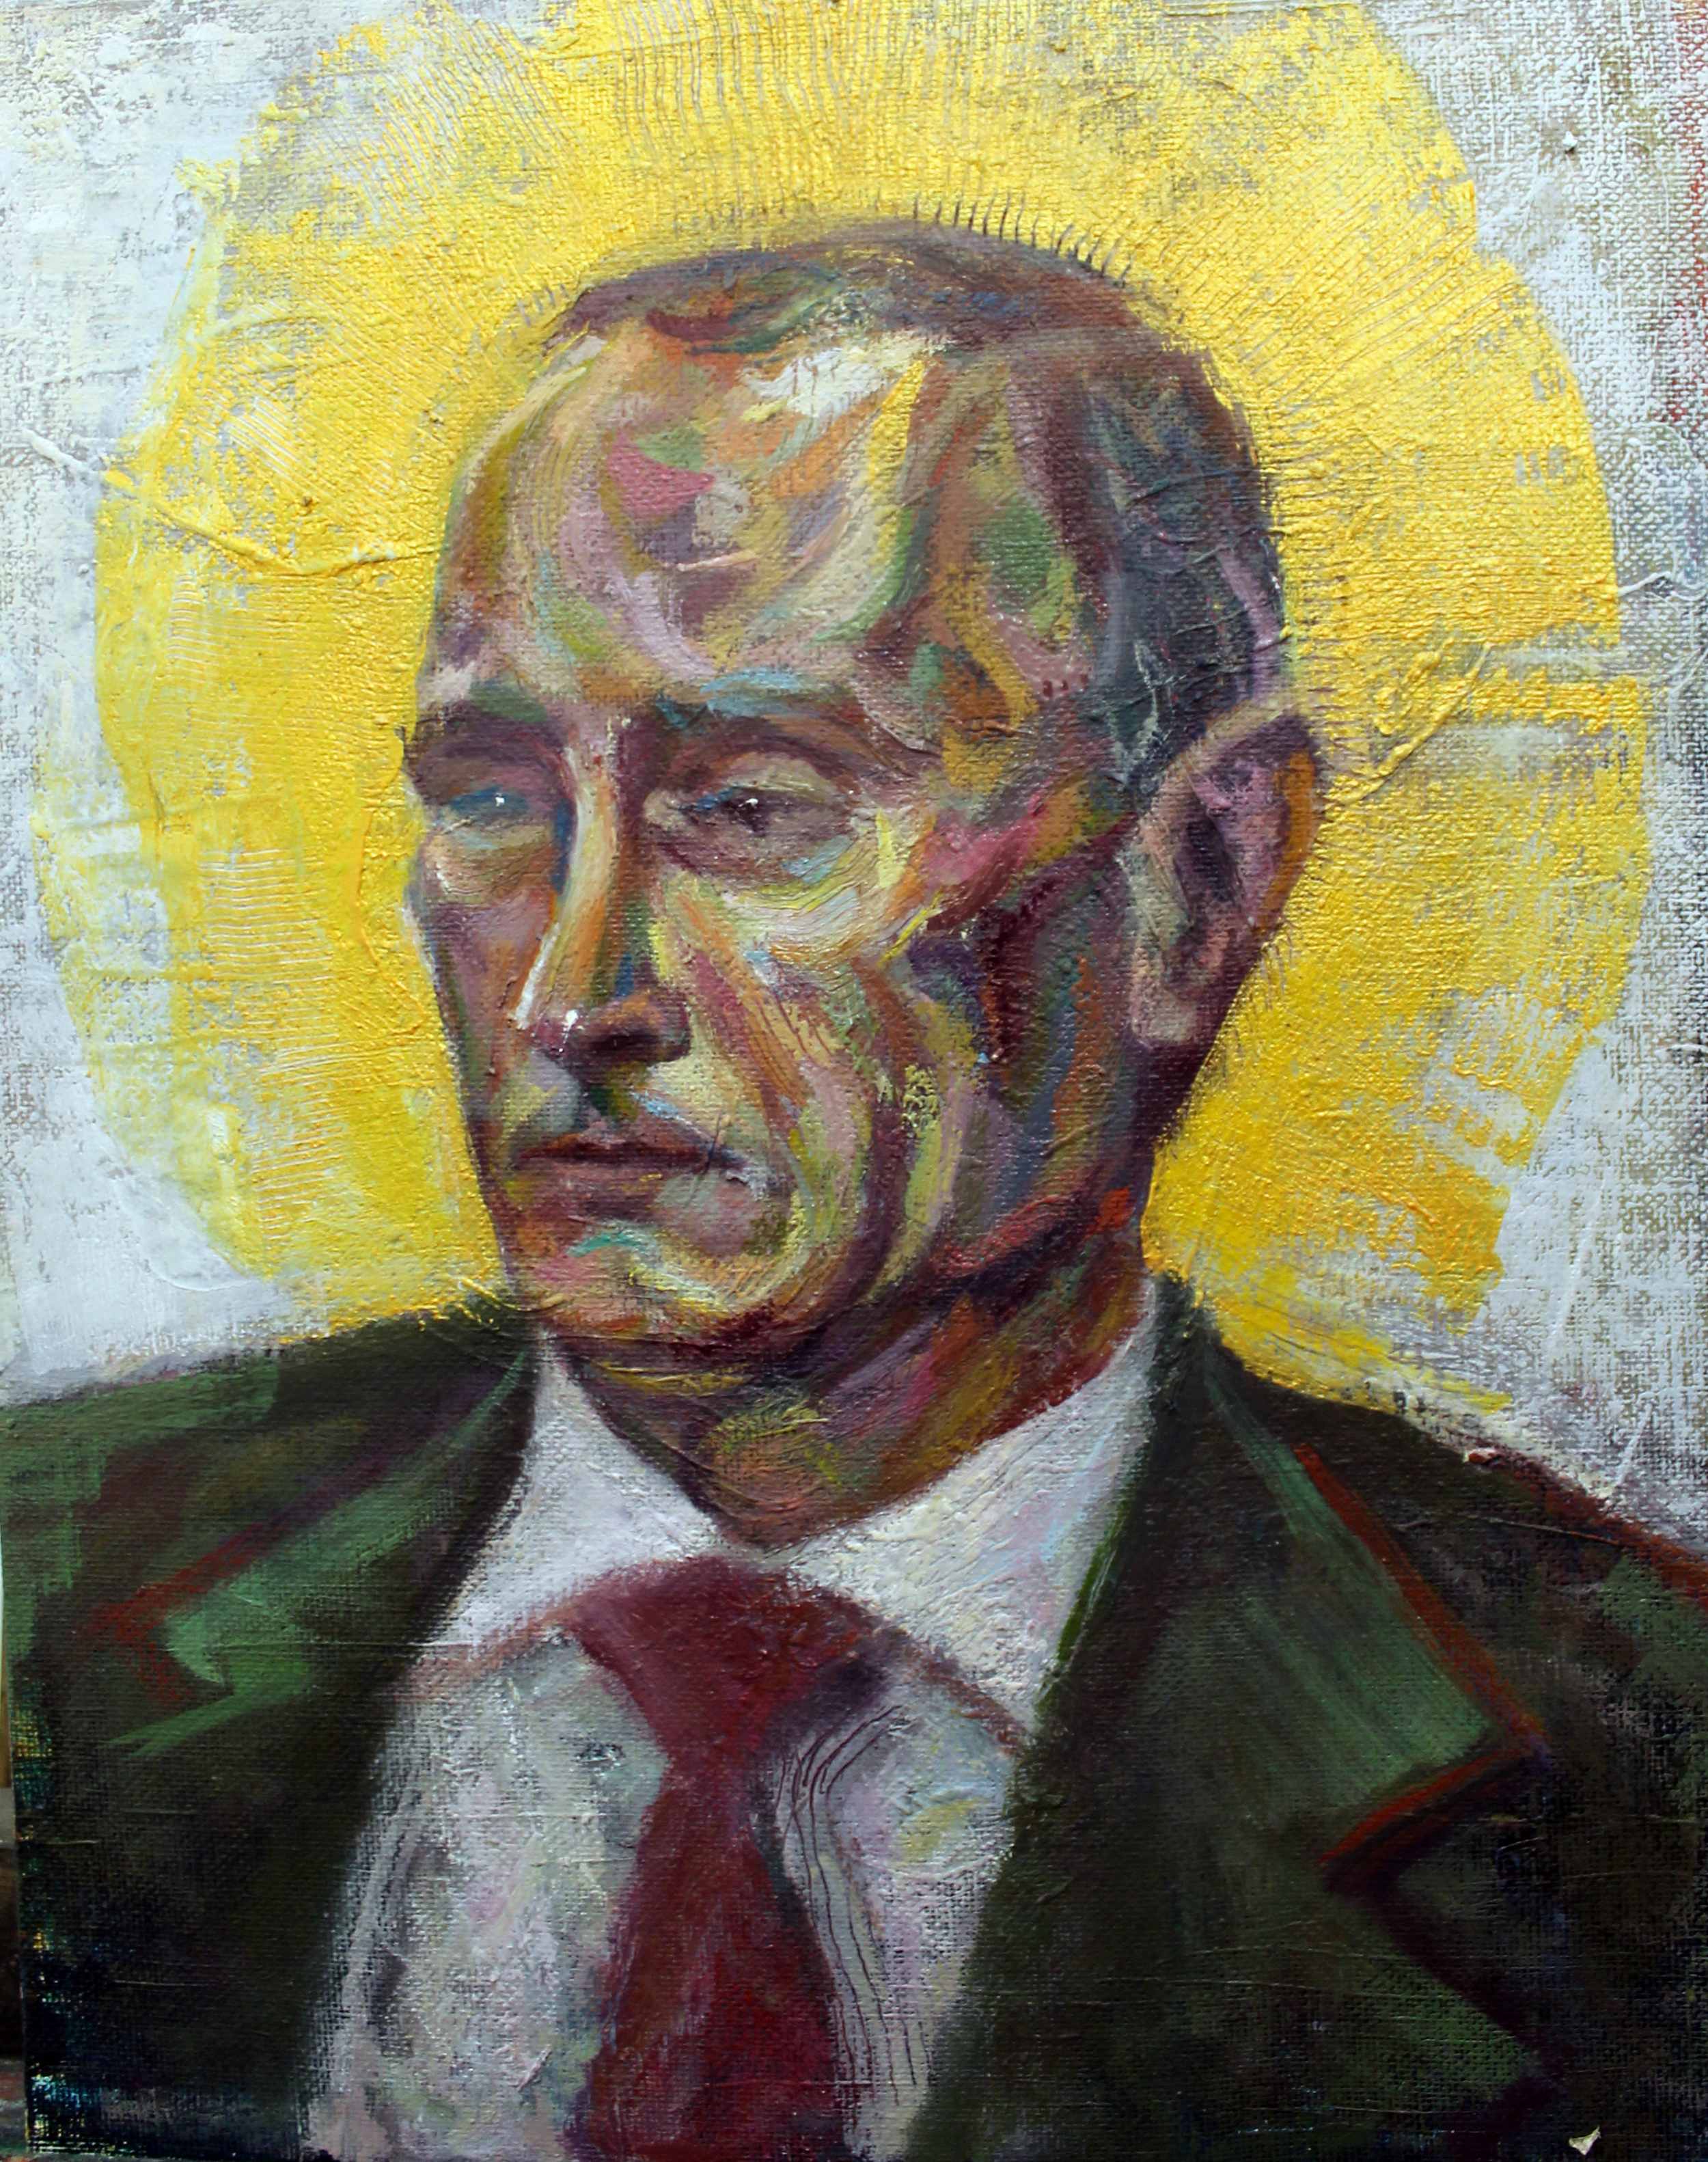 St. Putin